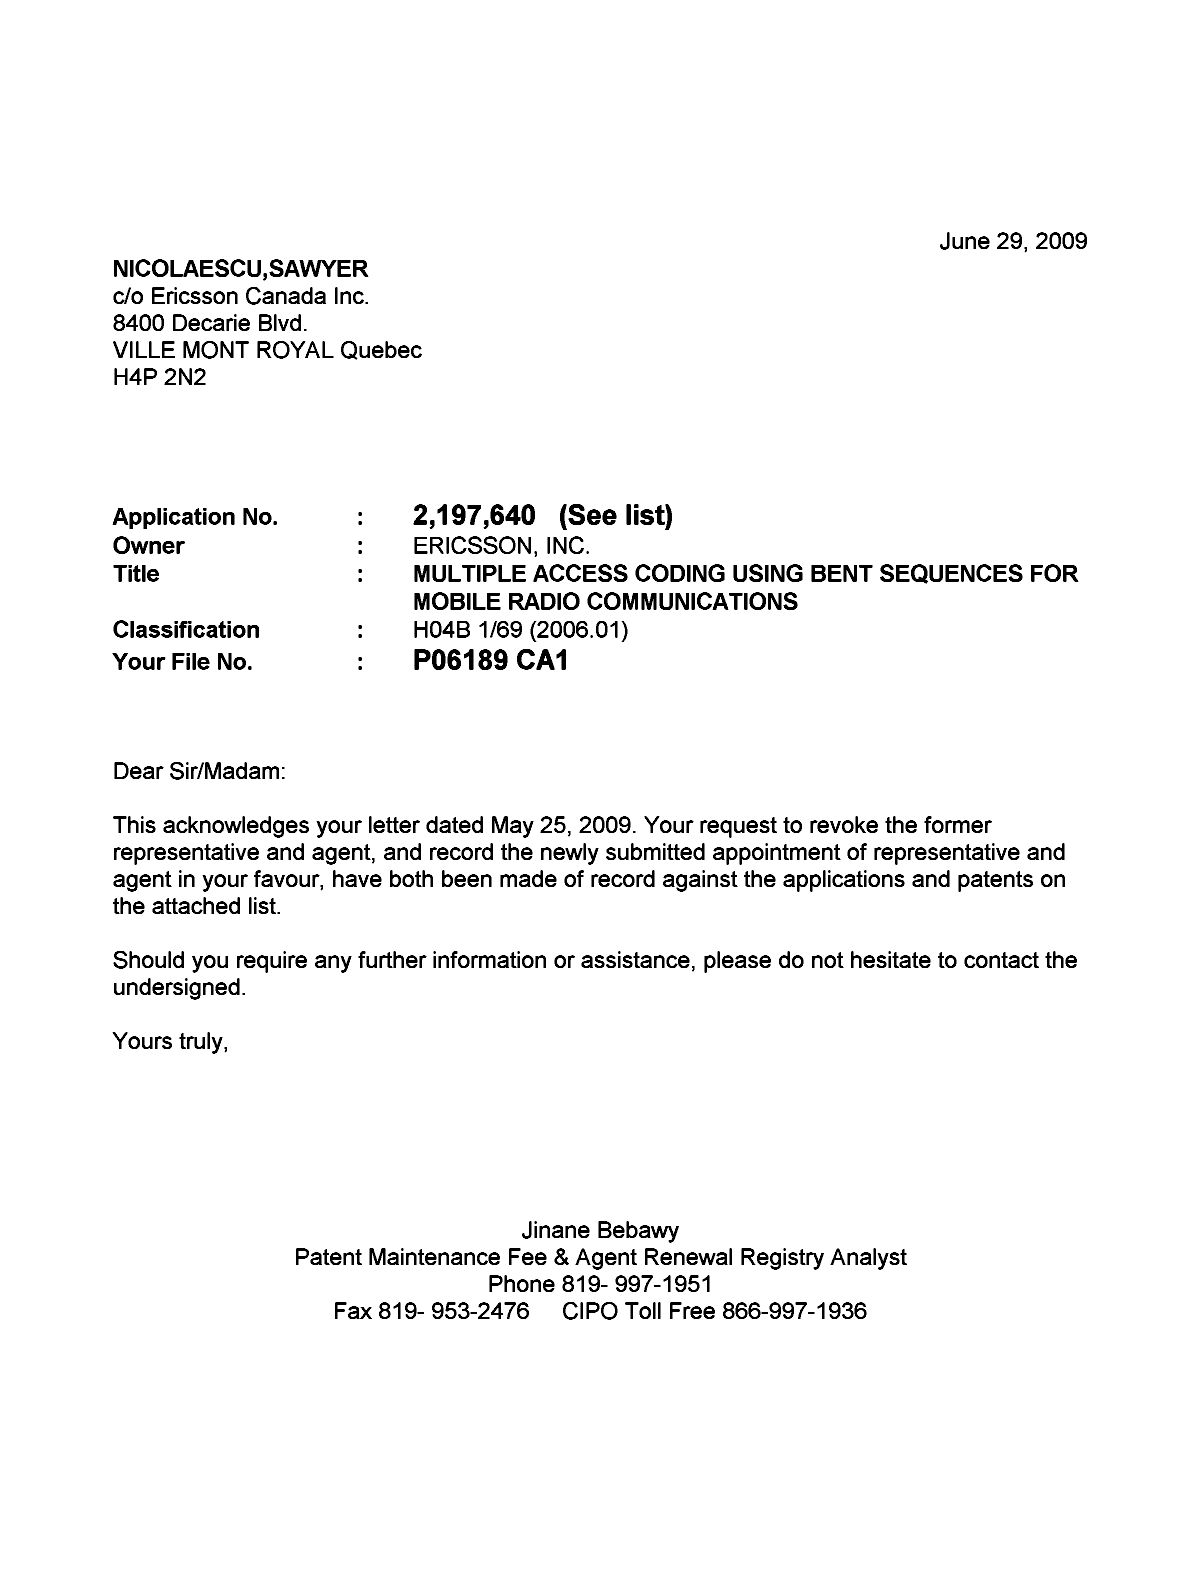 Canadian Patent Document 2329478. Correspondence 20090629. Image 1 of 1